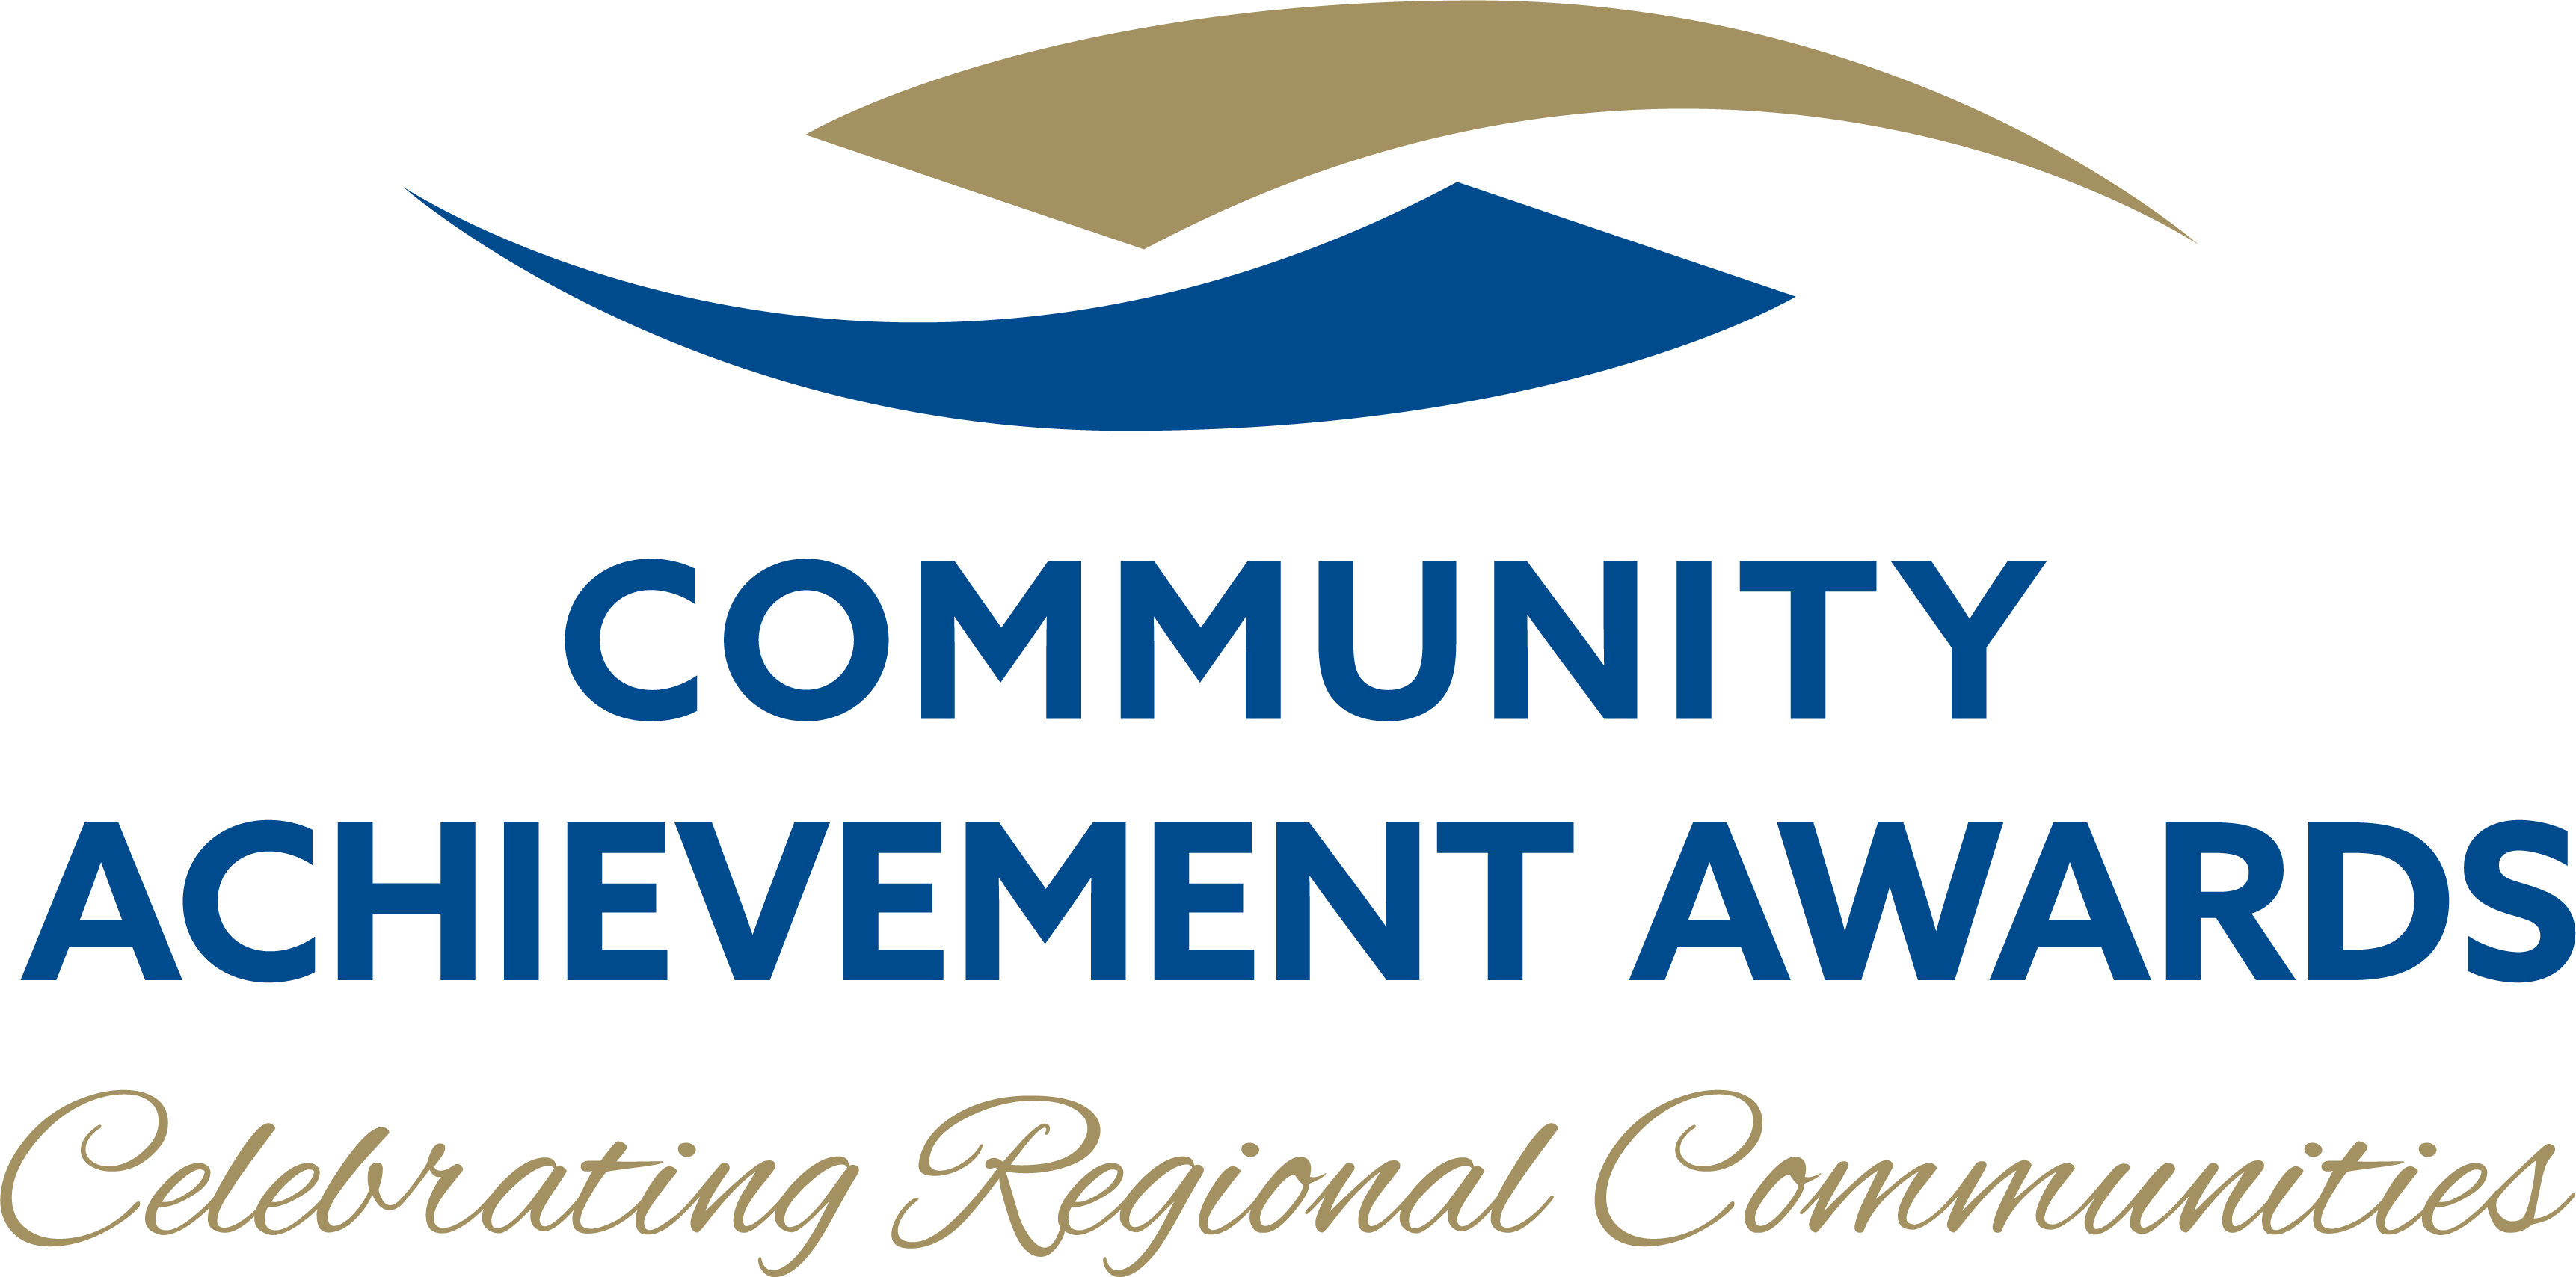 Community Achievement Awards